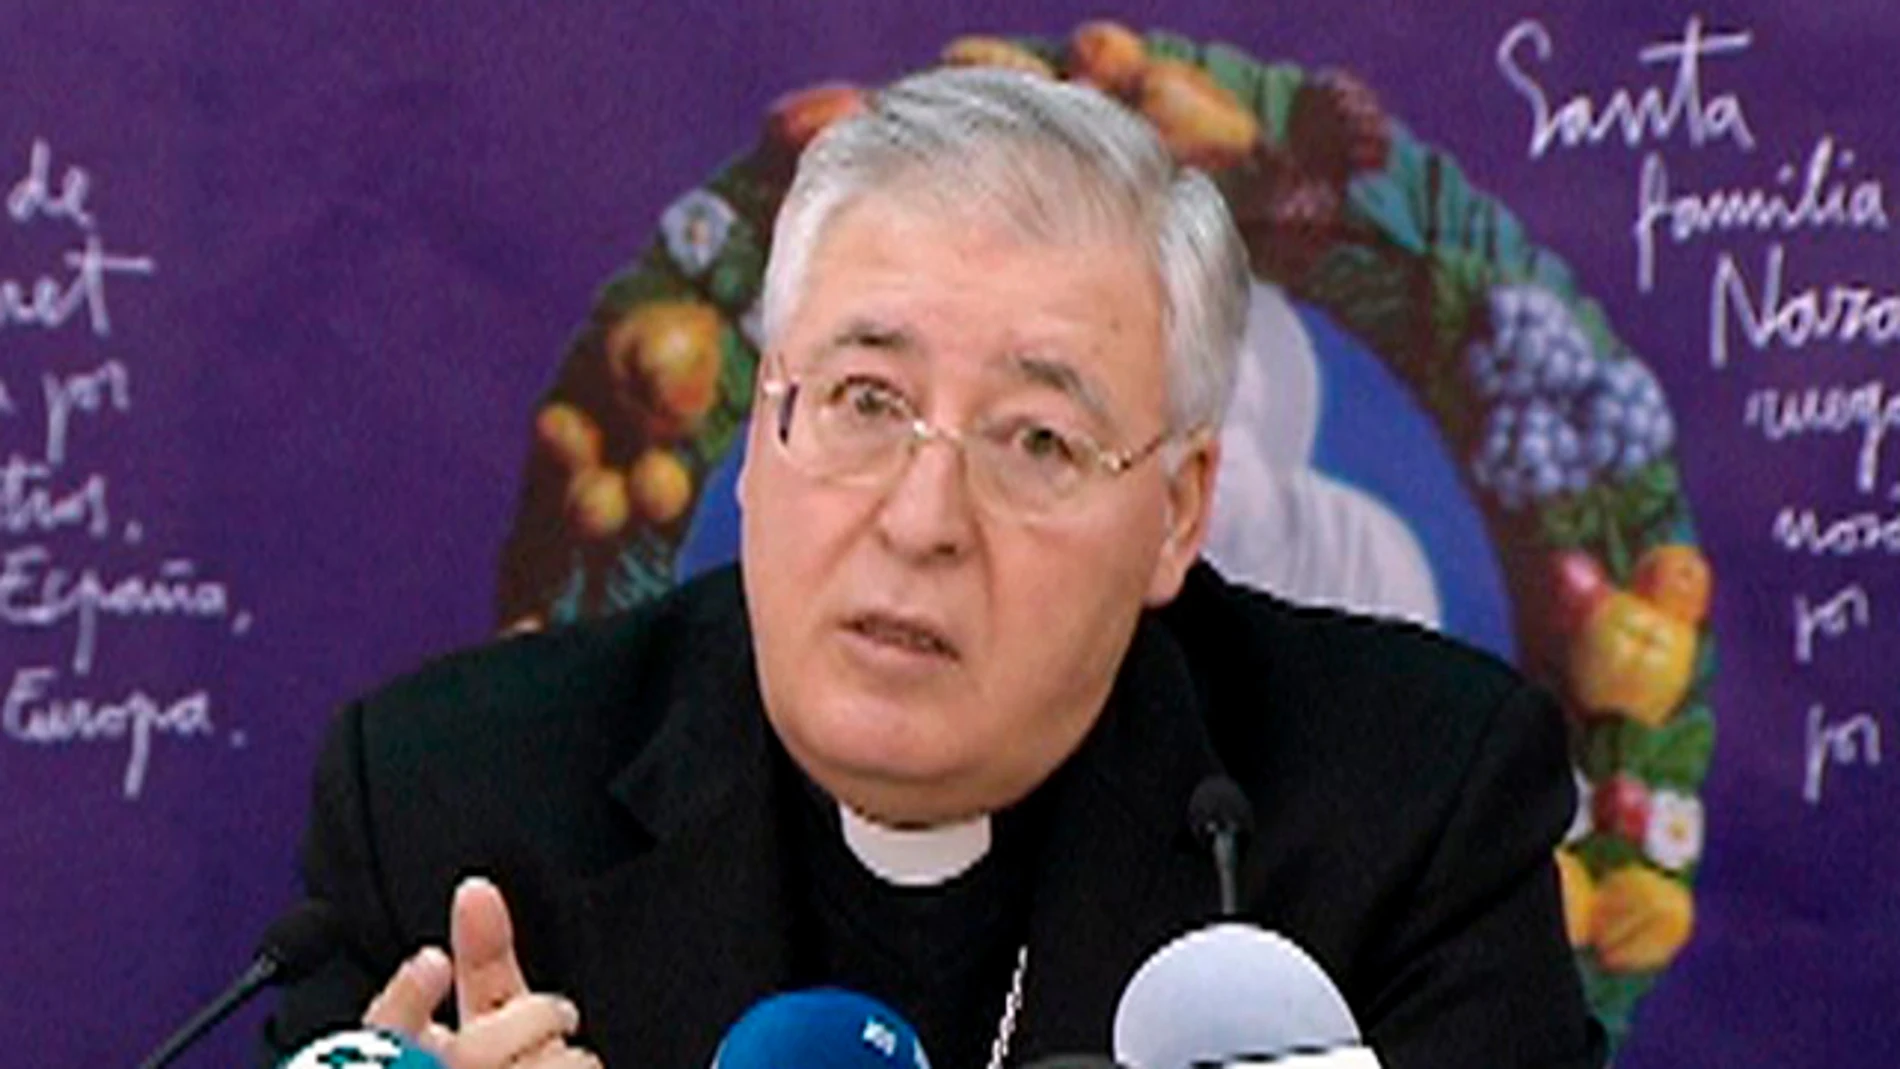 Monseñor Reig Plá, obispo de Alcalá de Henares